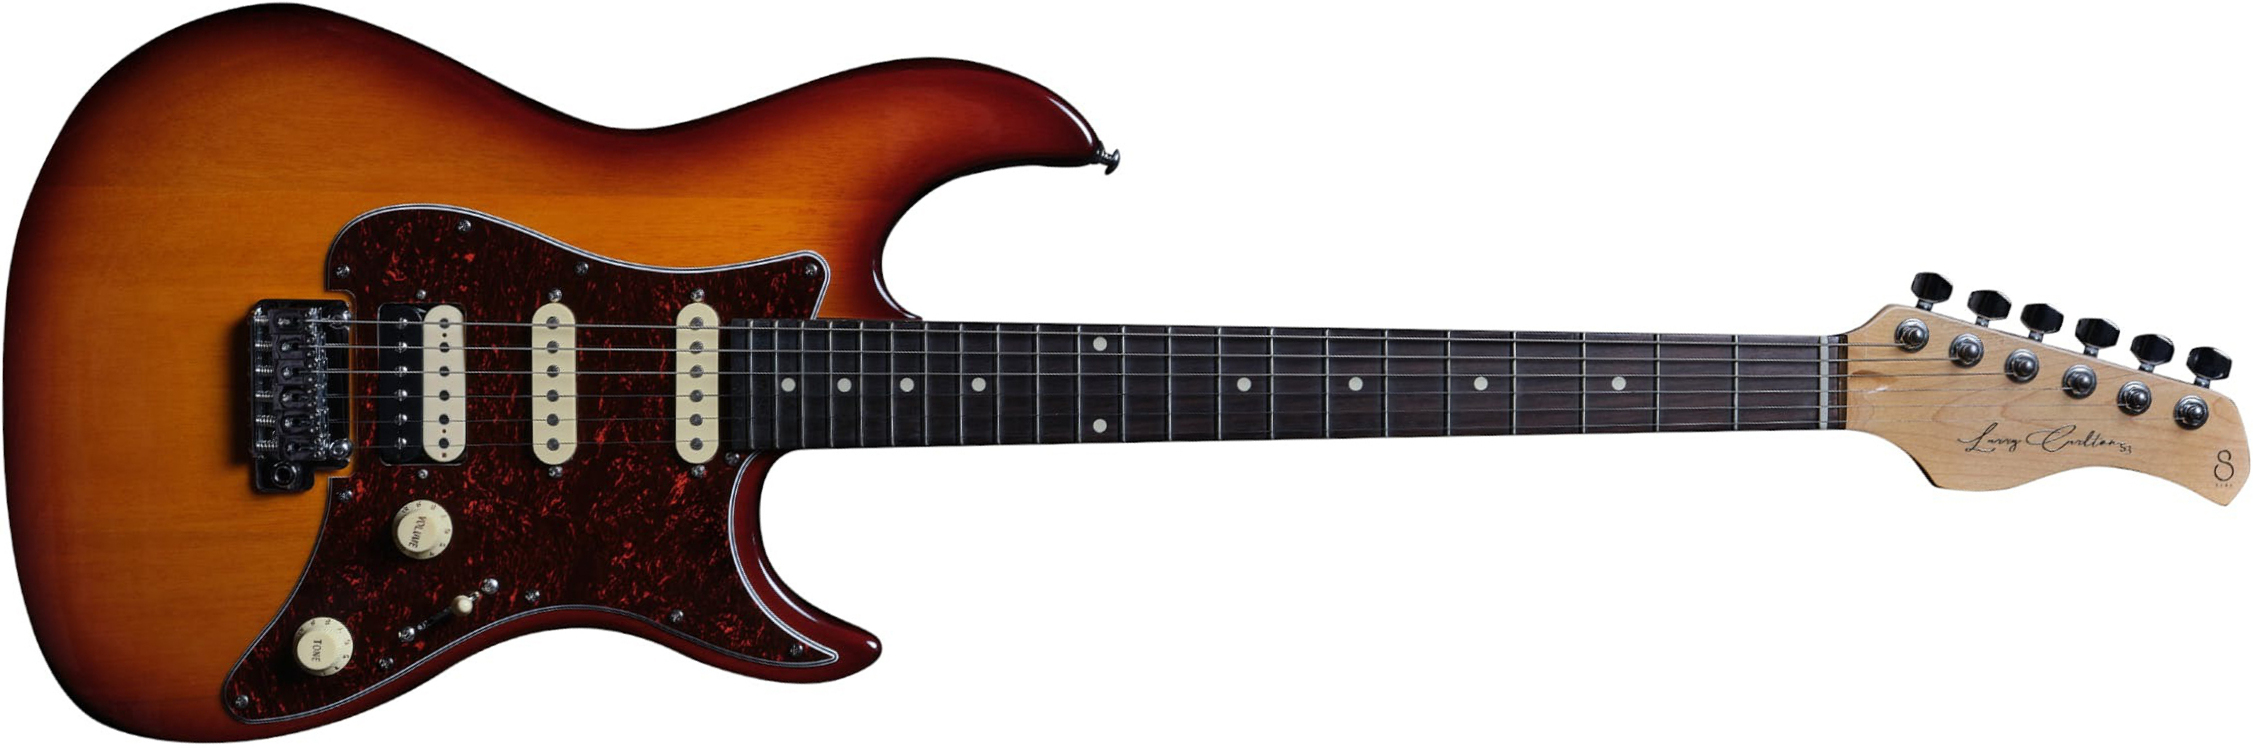 Sire Larry Carlton S3 Signature Hss Trem Rw - Tobacco Sunburst - Str shape electric guitar - Main picture